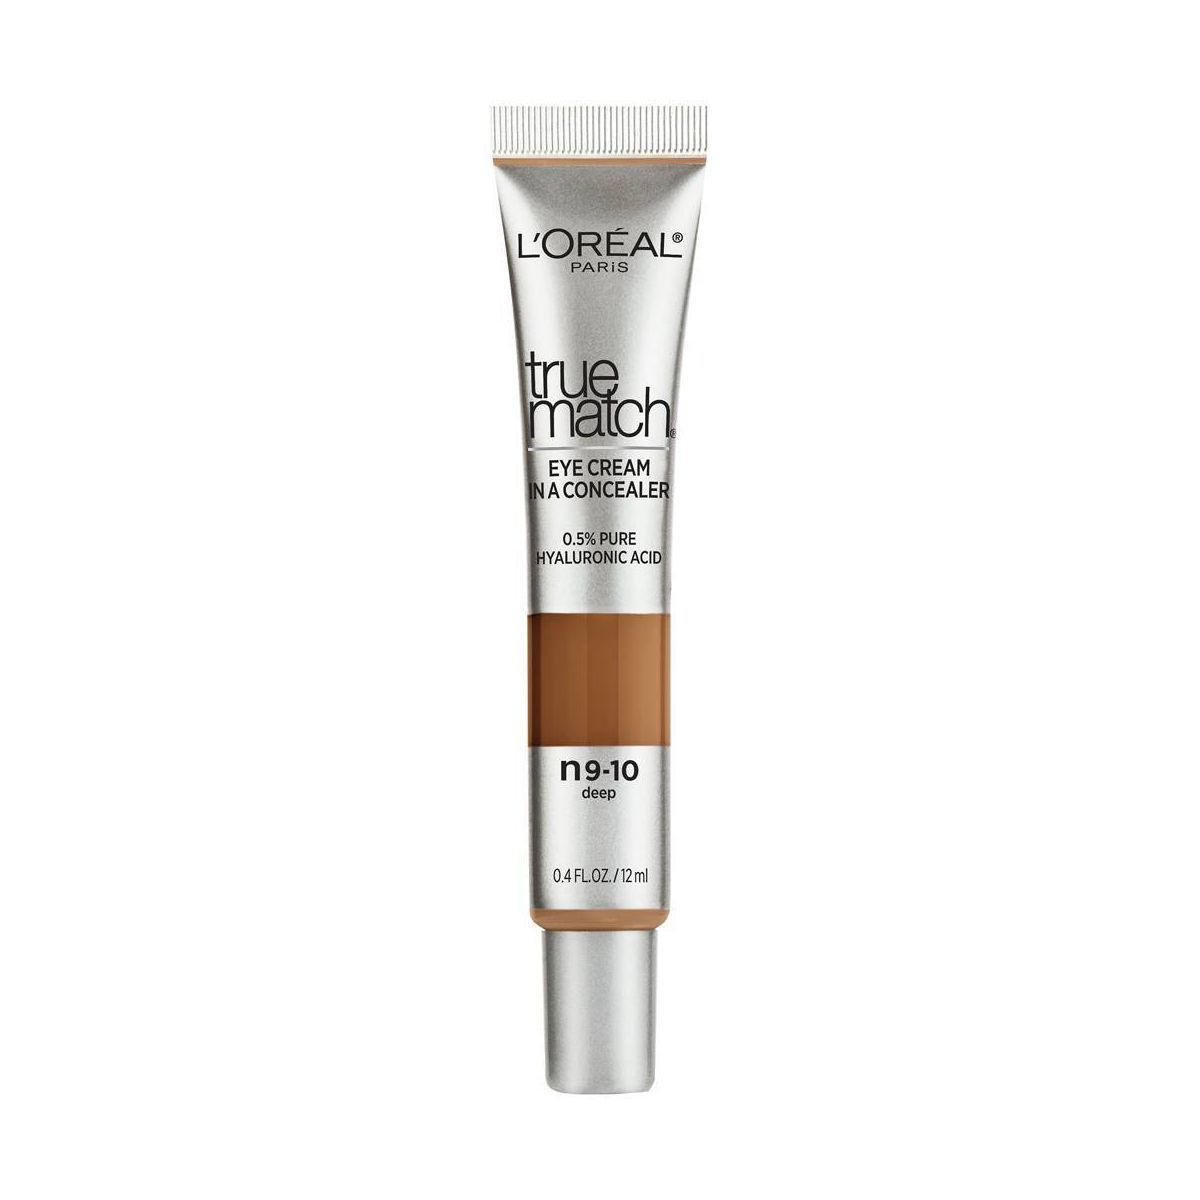 L'Oreal Paris True Match Eye Cream in a Concealer with Hyaluronic Acid - Deep N9-10 - 0.4 fl oz | Target